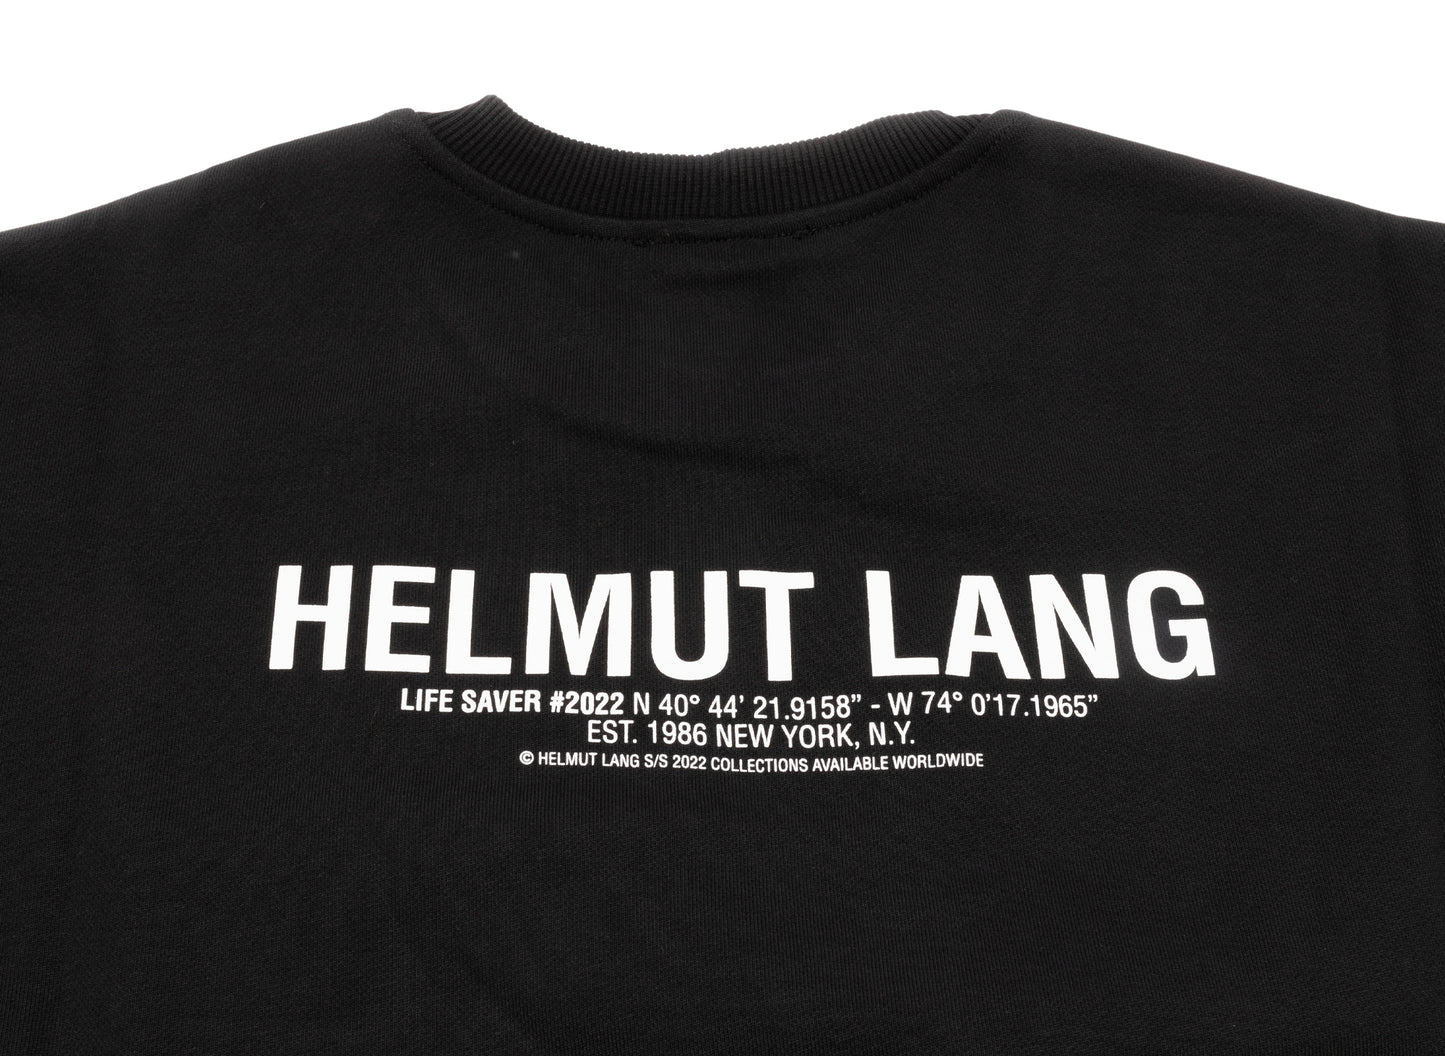 Helmut Lang Lifeguard Sweatshirt S at FORZIERI Canada